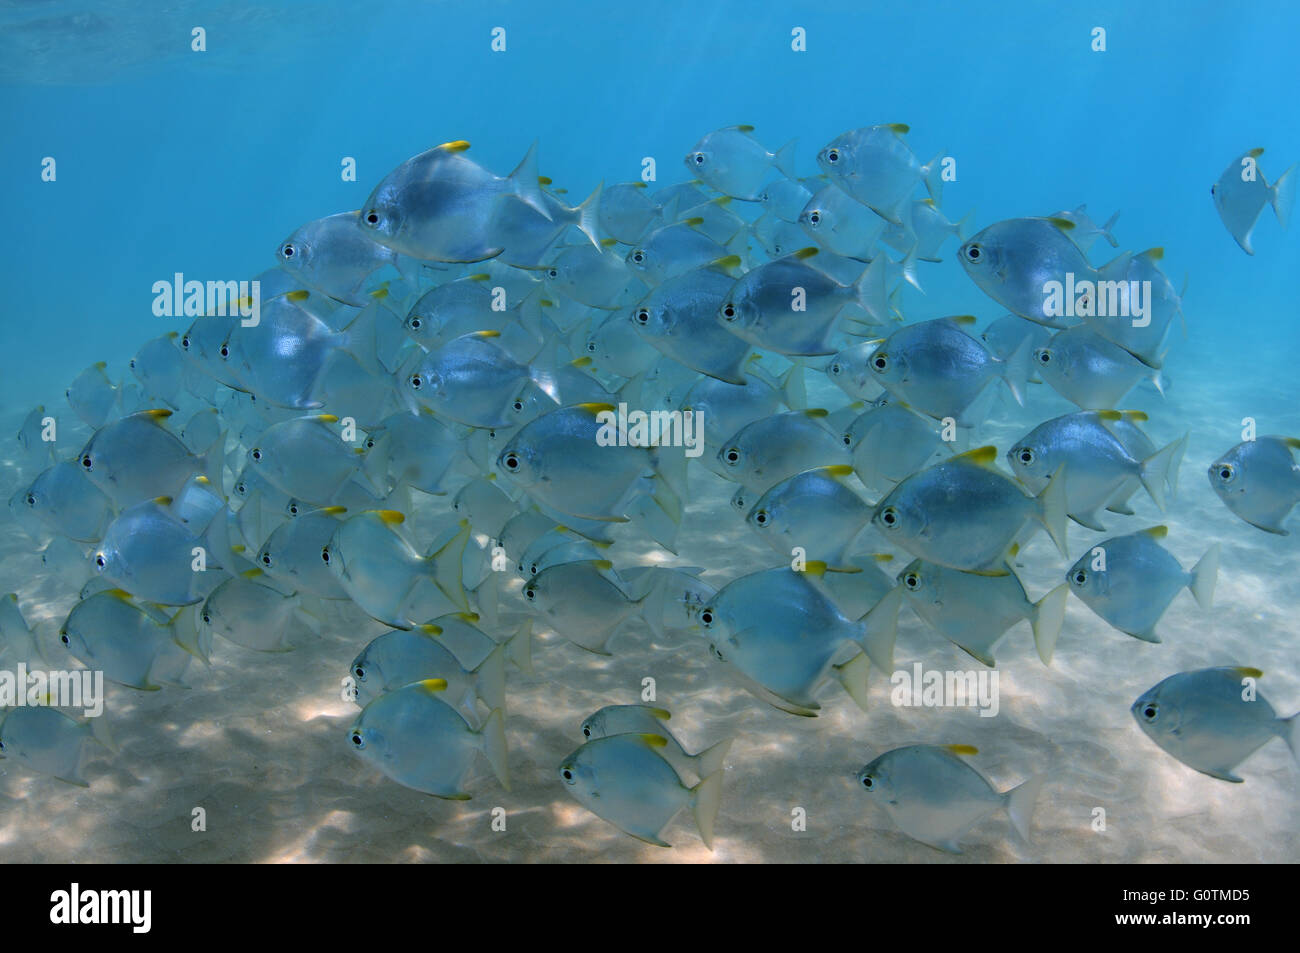 Scuola di pesce argento moony', argento, moonfish fingerfish, Mono, diamond moonfish o: la malese angel (Monodactylus argenteus) Foto Stock